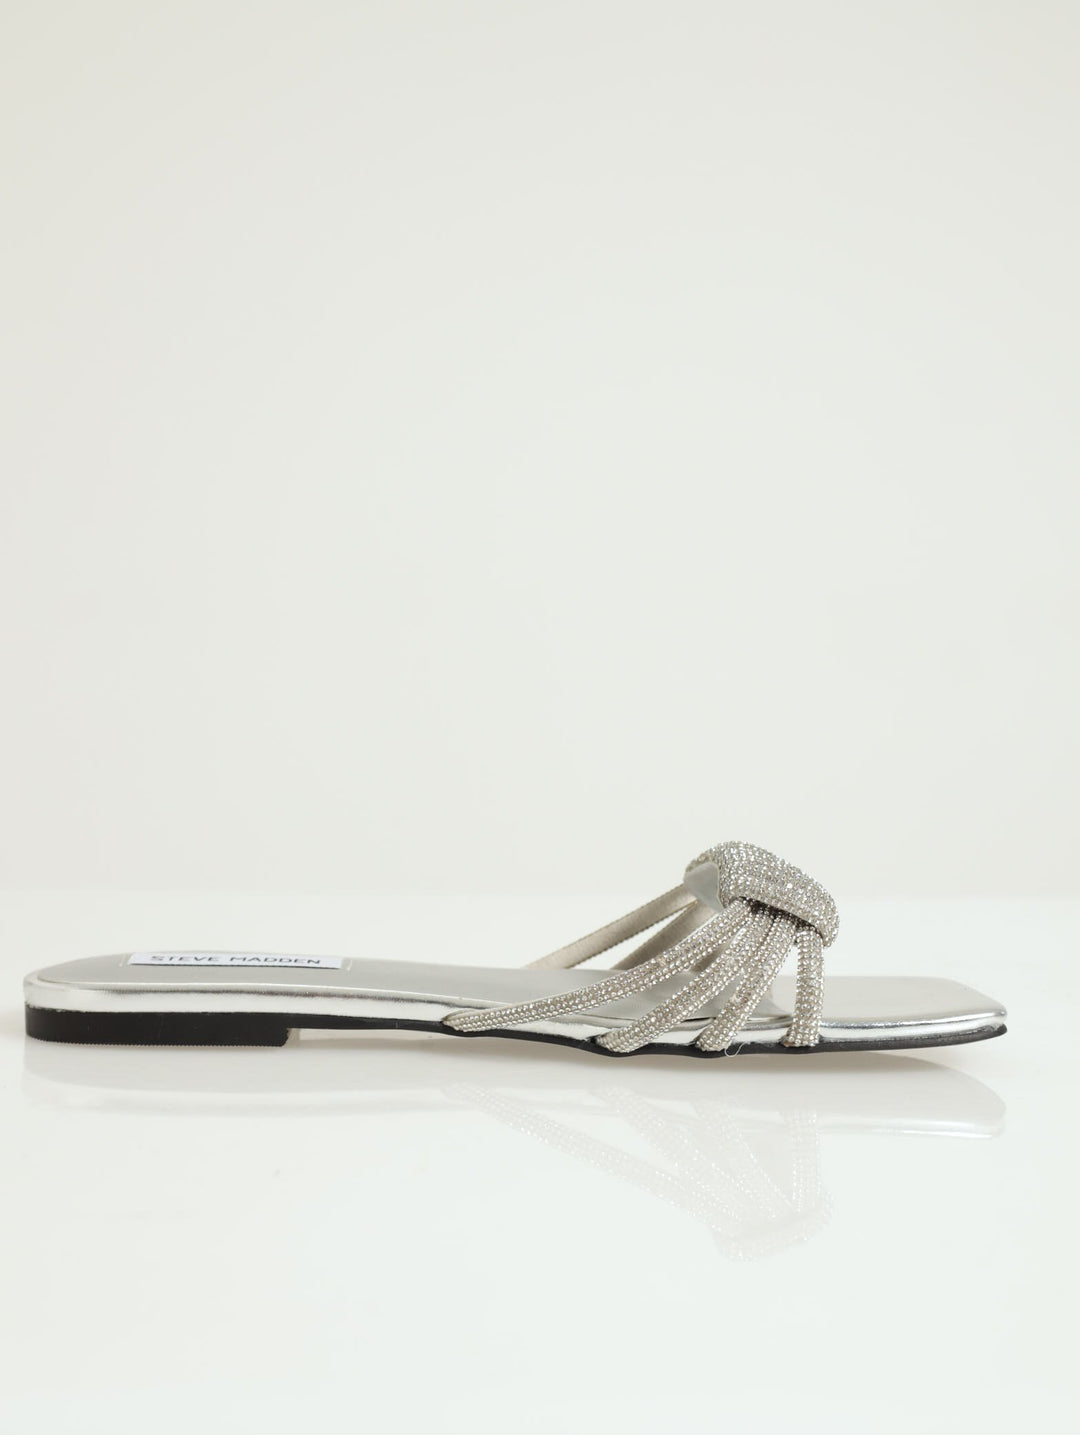 Harmoney Glitz Mule Flat Sandal - Silver